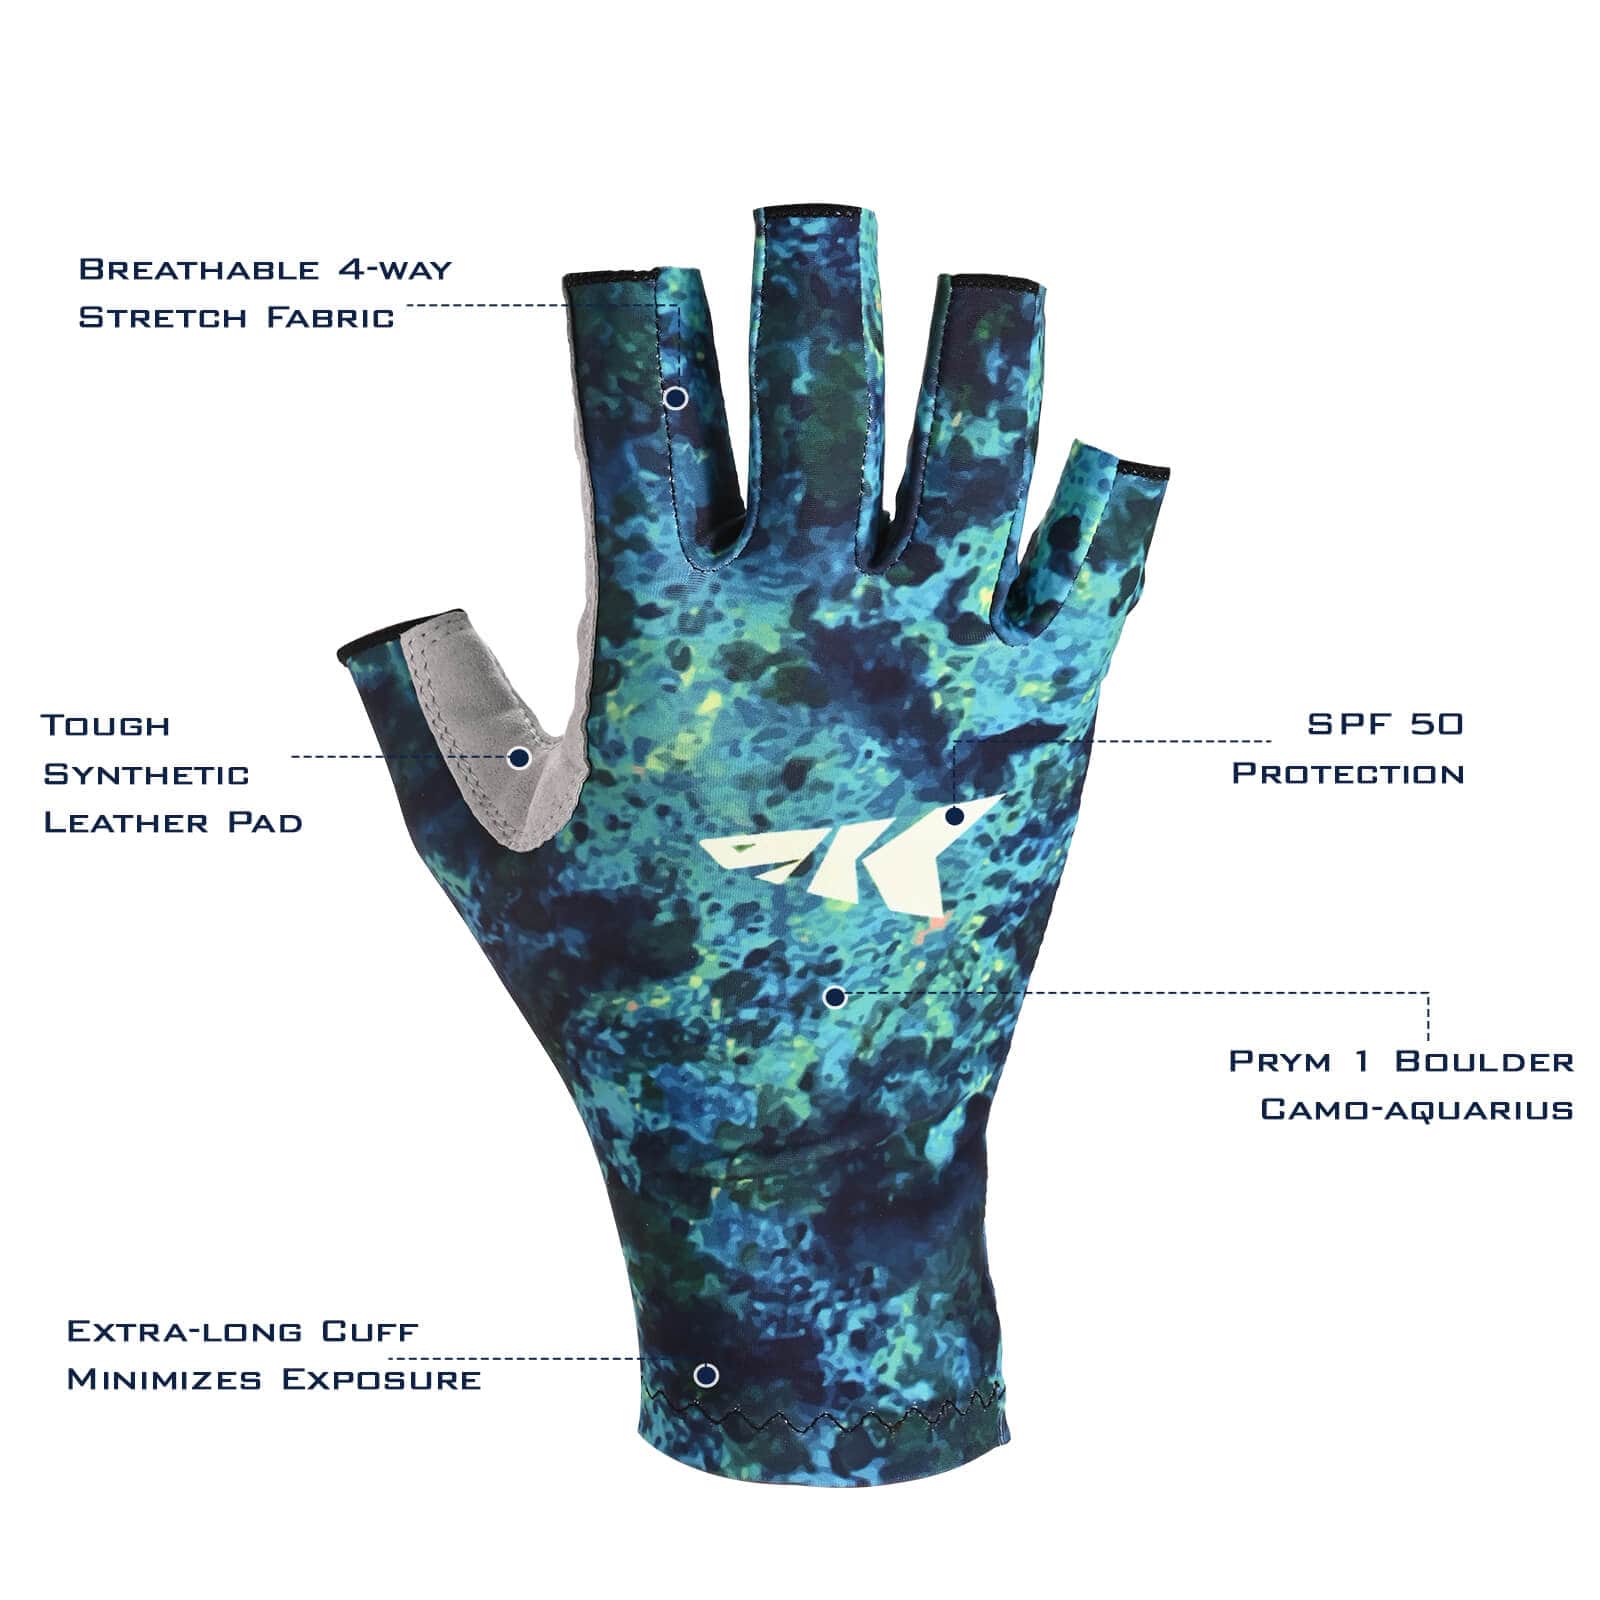 KastKing La Sal Fishing Gloves UPF50+ Sun Gloves UV Protection